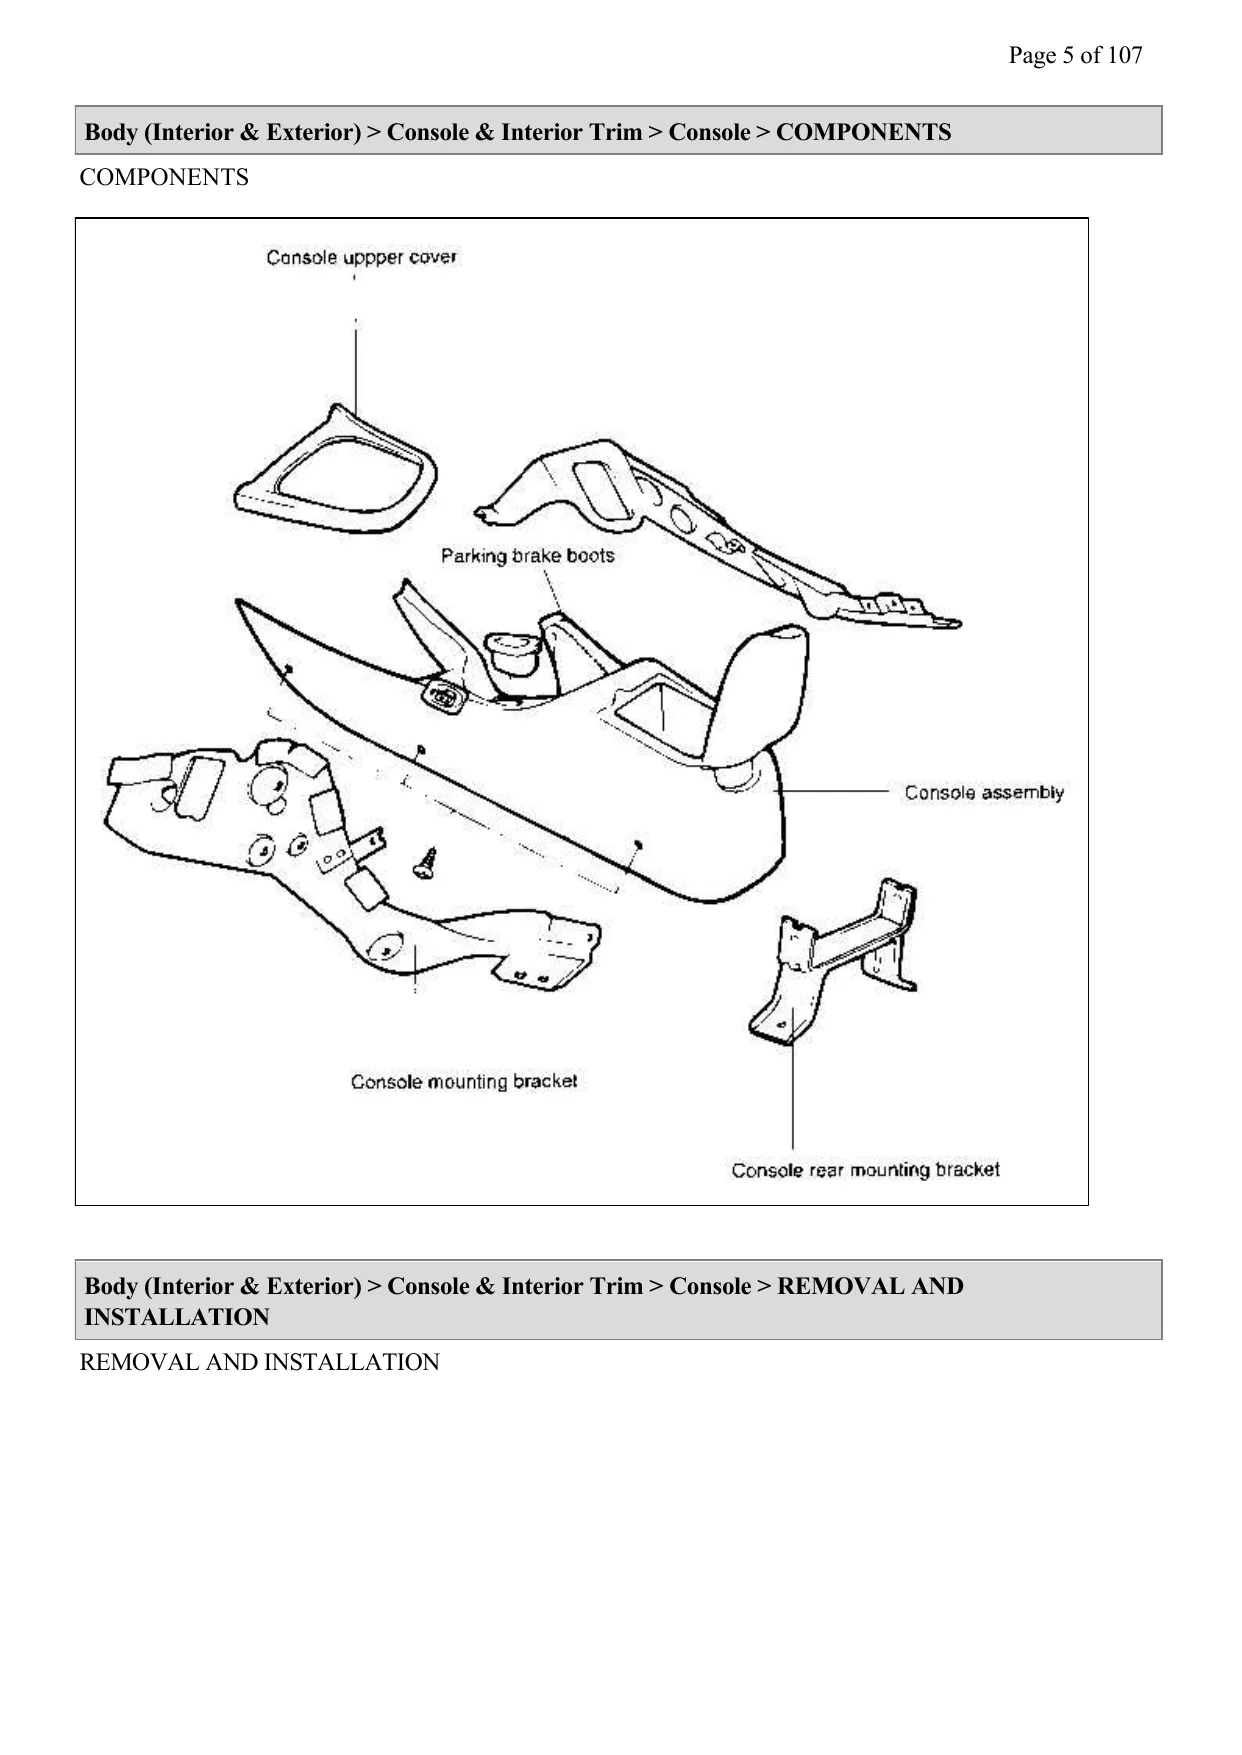 1997-2001 Hyundai Tiburon shop manual Preview image 5